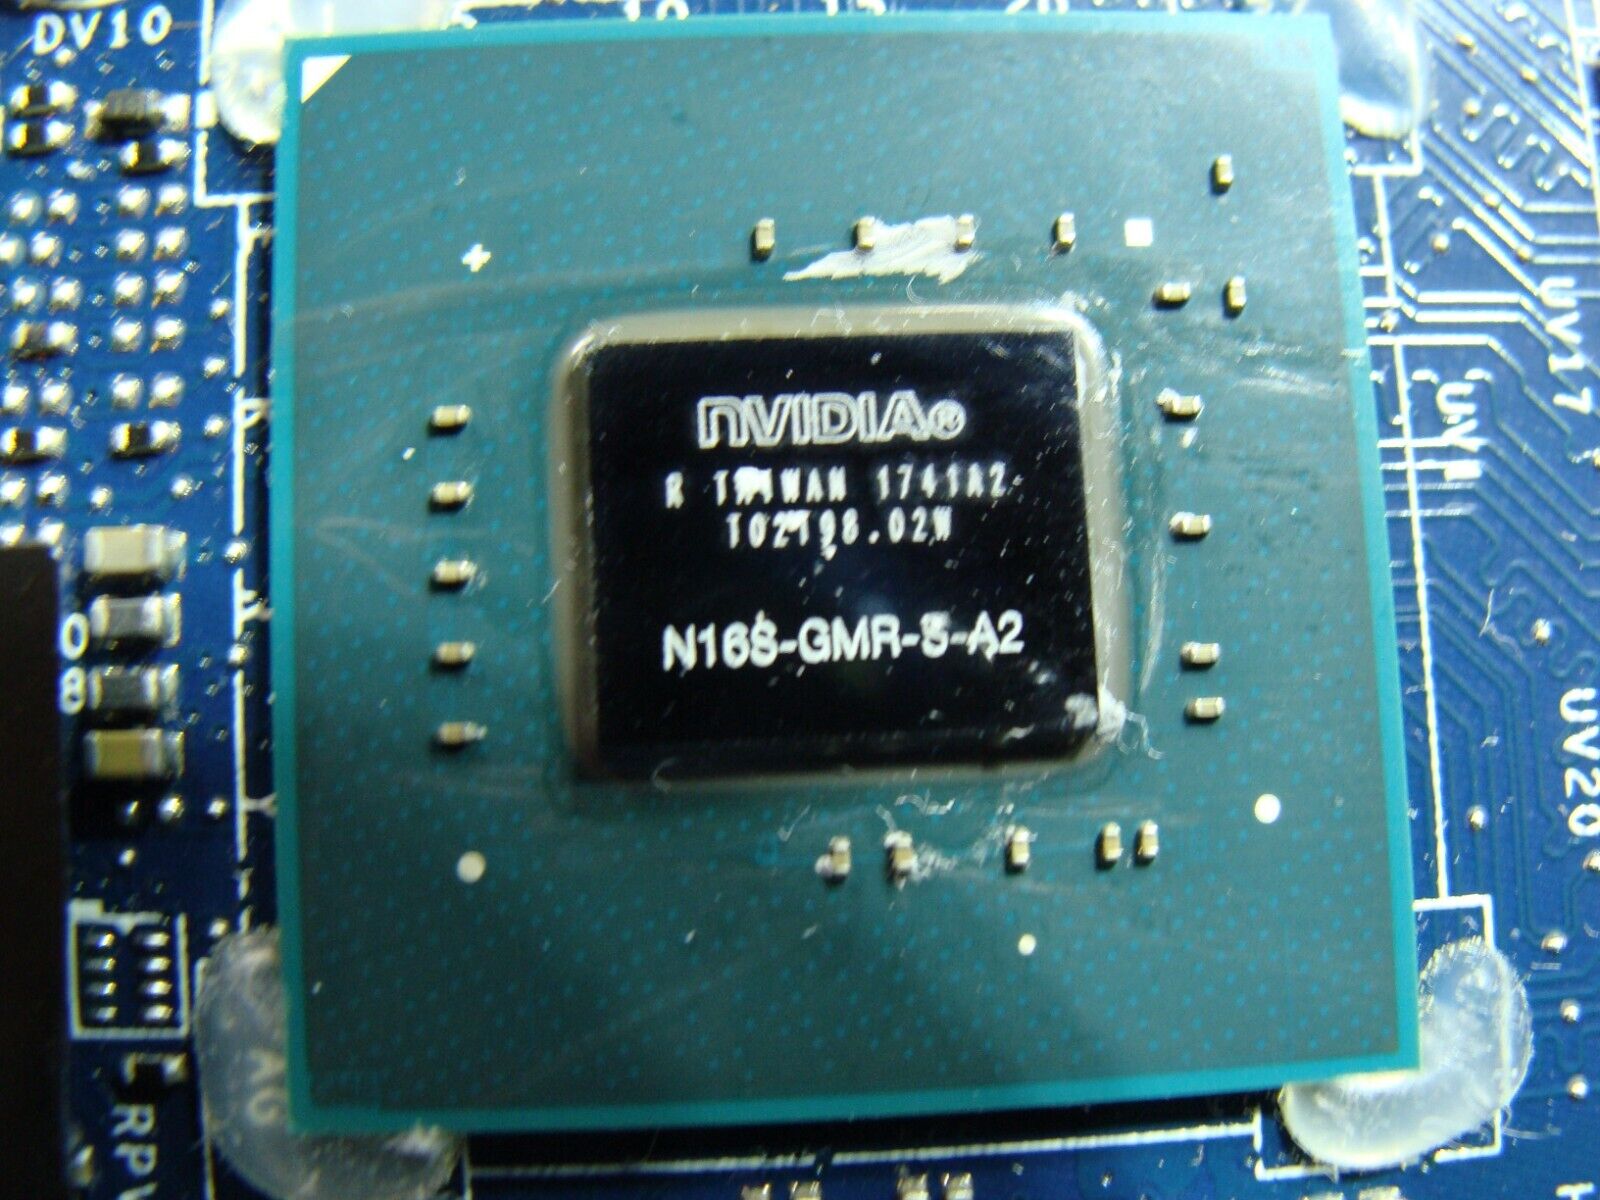 Dell Latitude 14 5480 Genuine Laptop Intel i5-7300U 2.6GHz Motherboard 6PV53